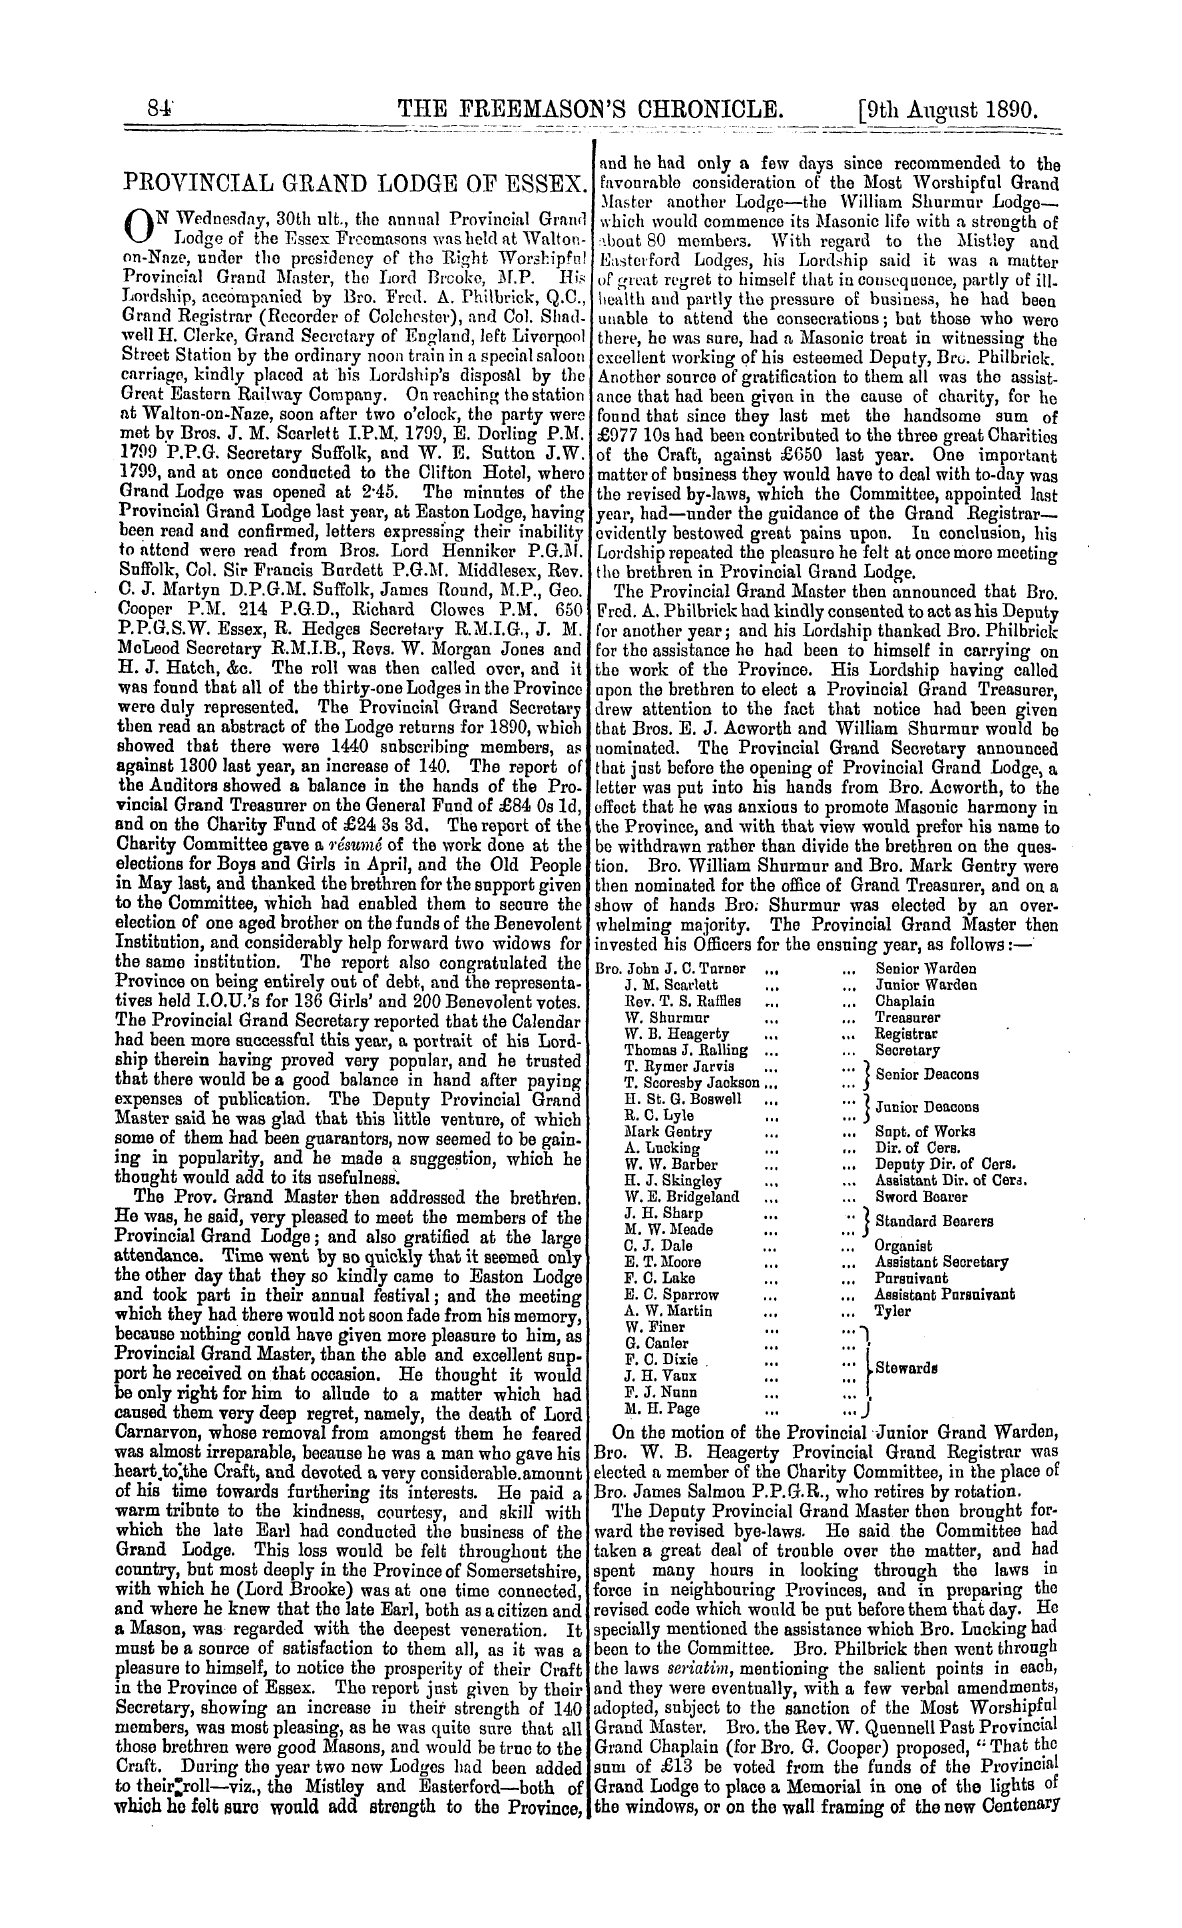 The Freemason's Chronicle: 1890-08-09: 4